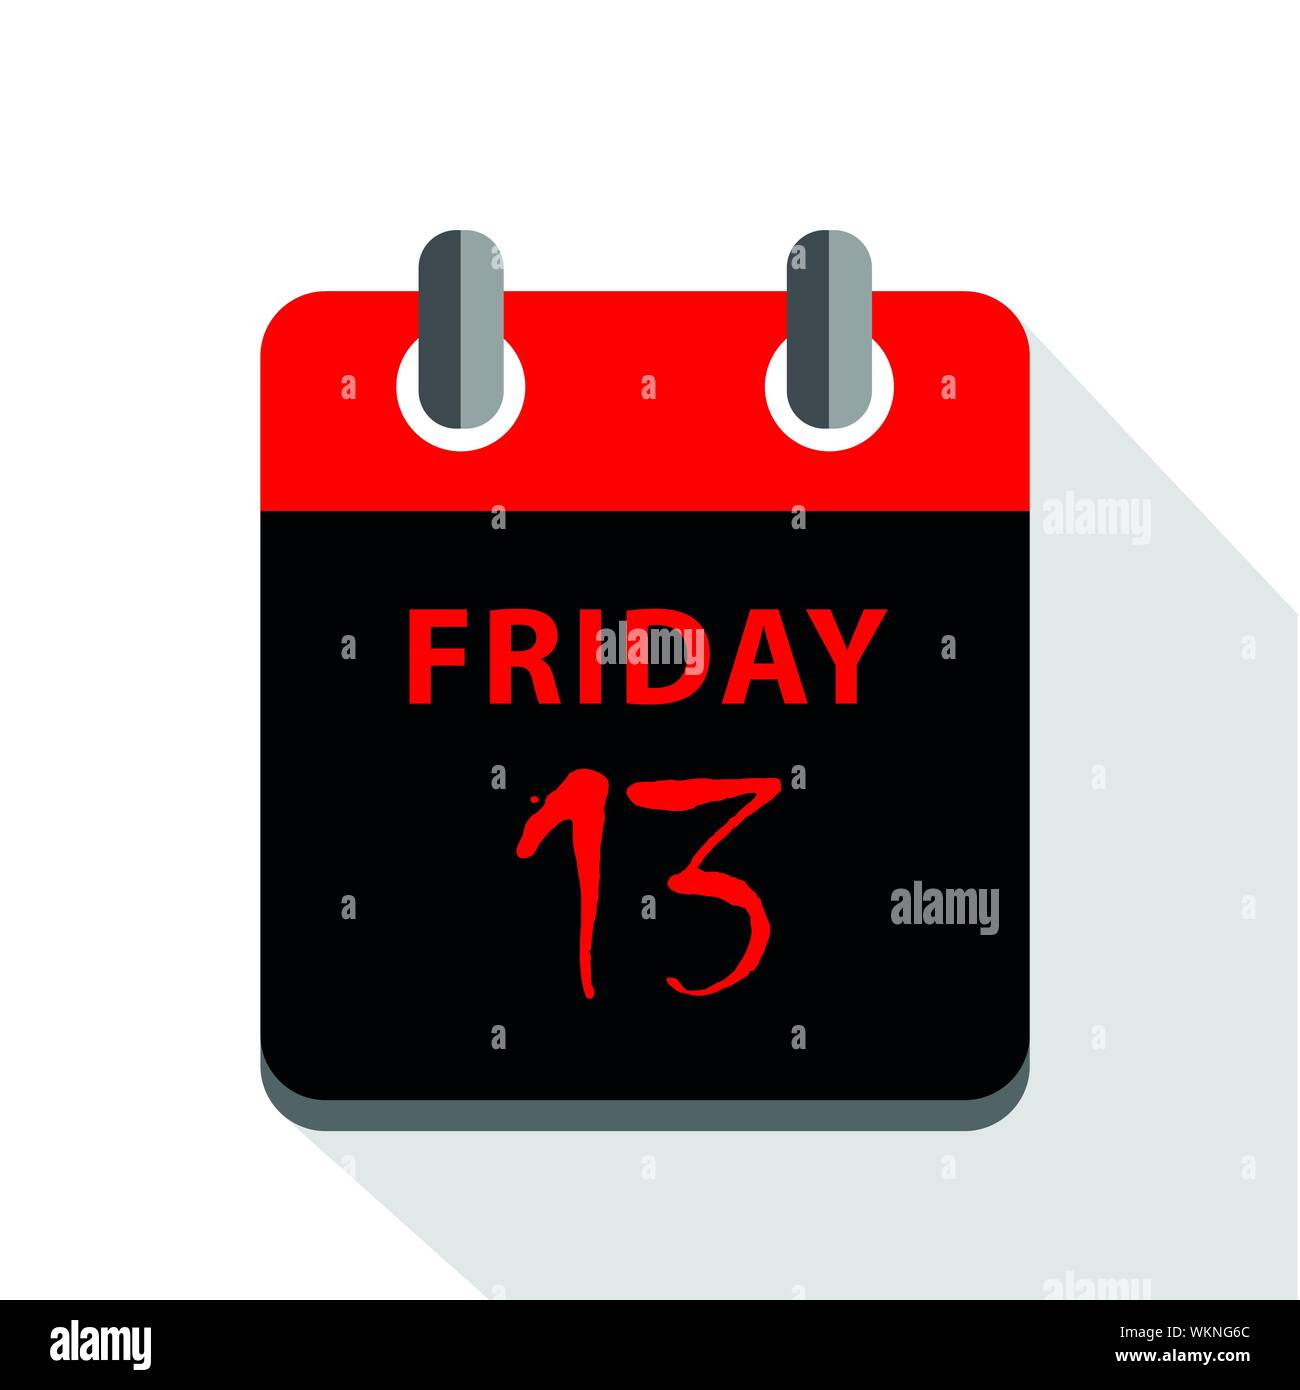 friday-the-13th-calendar-icon-vector-illustration-eps10-stock-vector-image-art-alamy